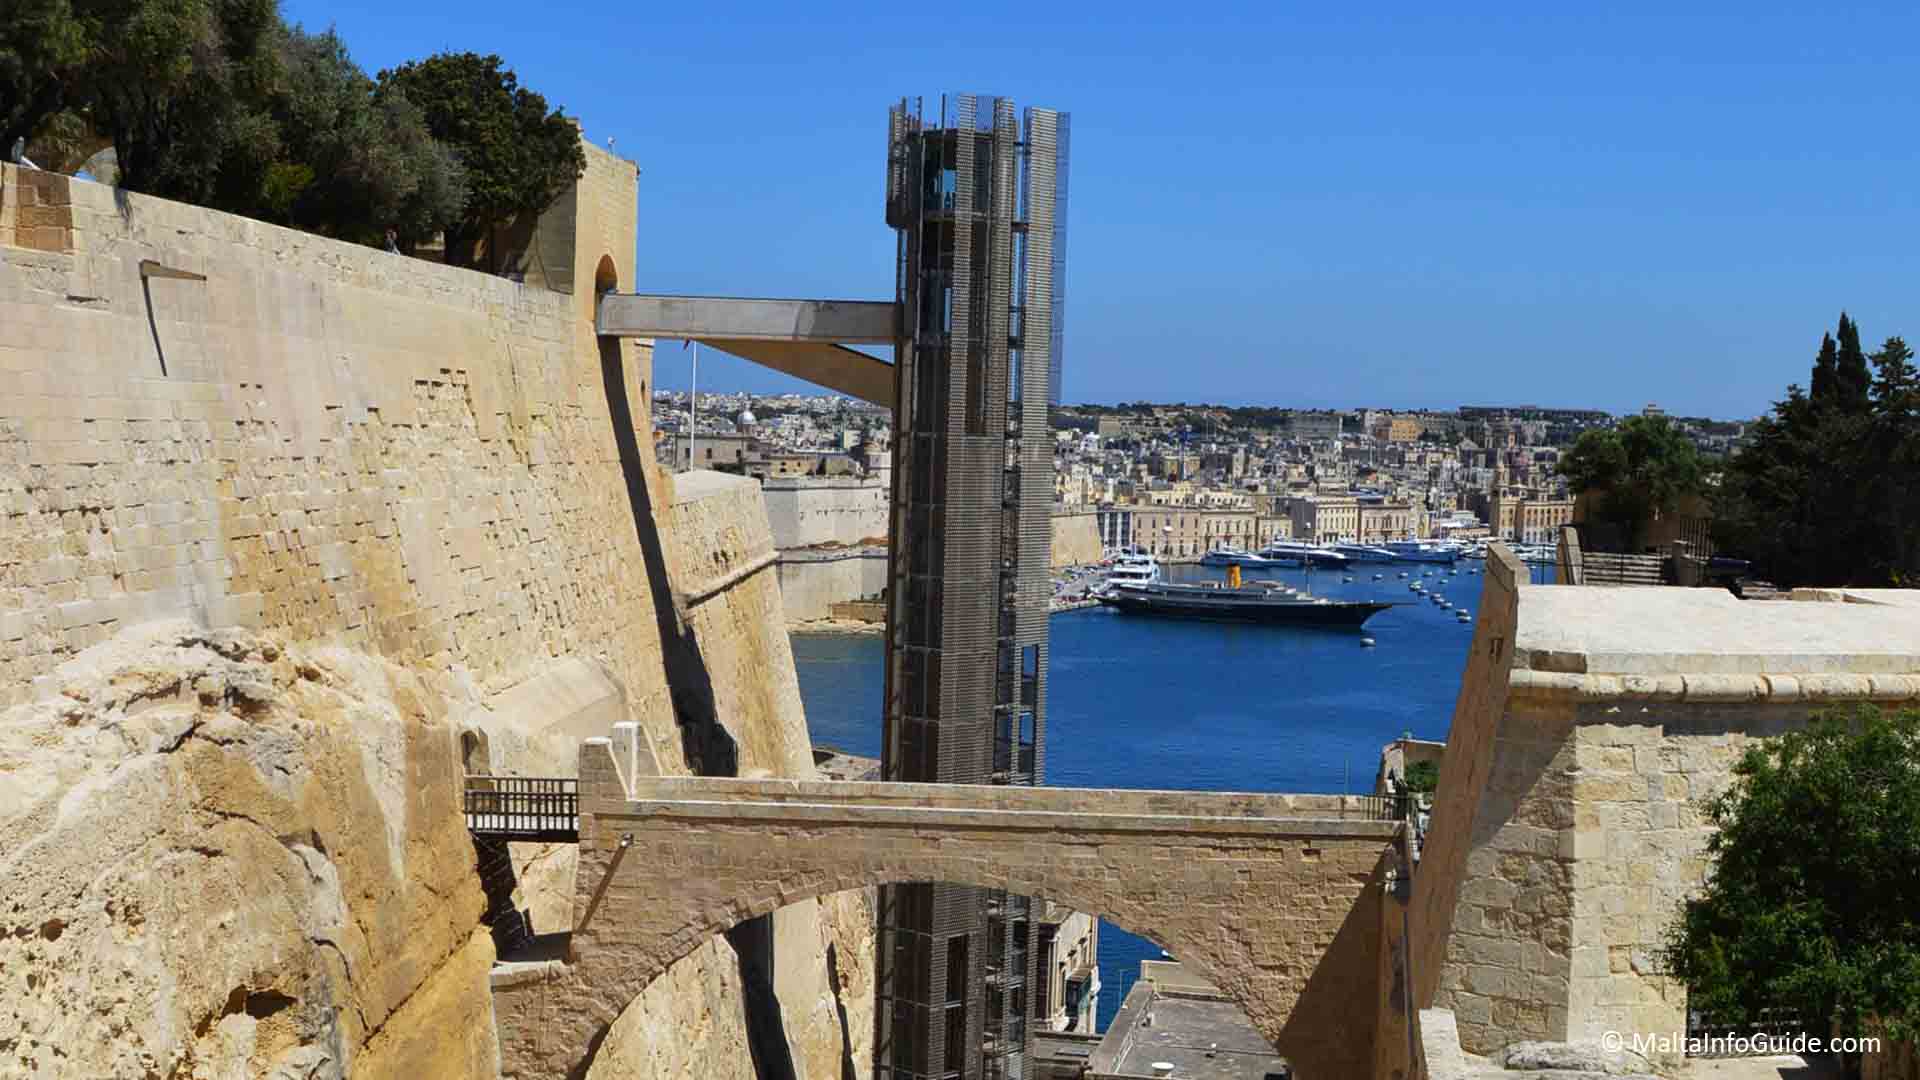 The lift of Upper Barrakka Gardens Malta